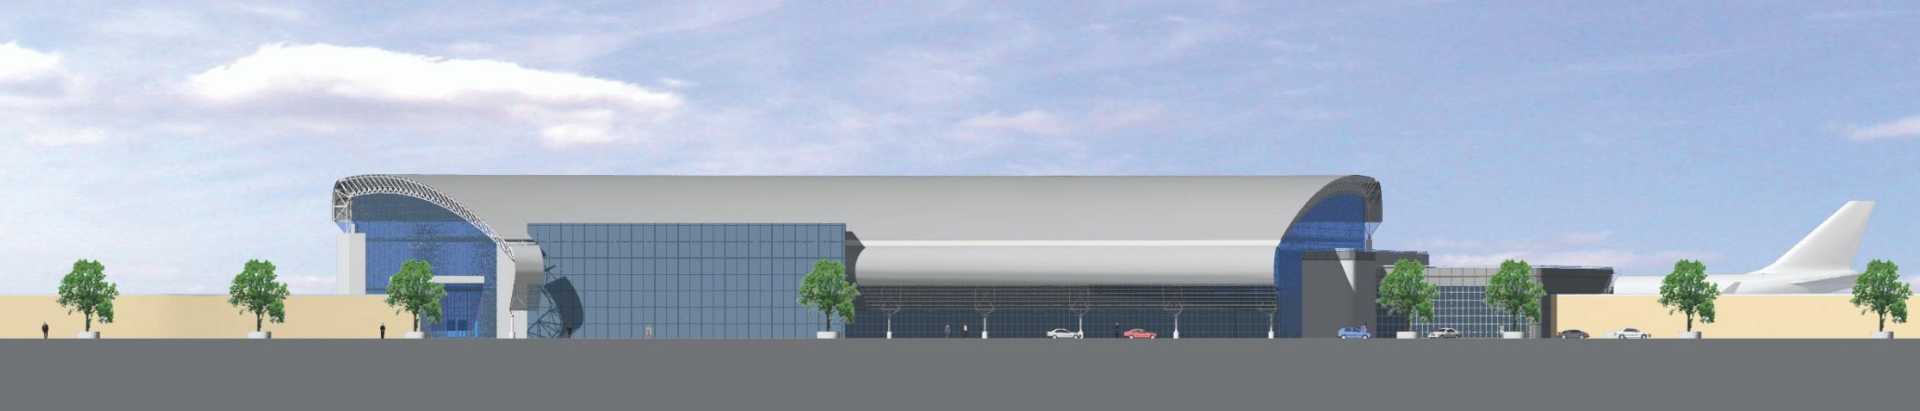 OAC Architects | Project | Murtala Muhammed Airport Terminal 2 (MMA2), Ikeja, Lagos 11